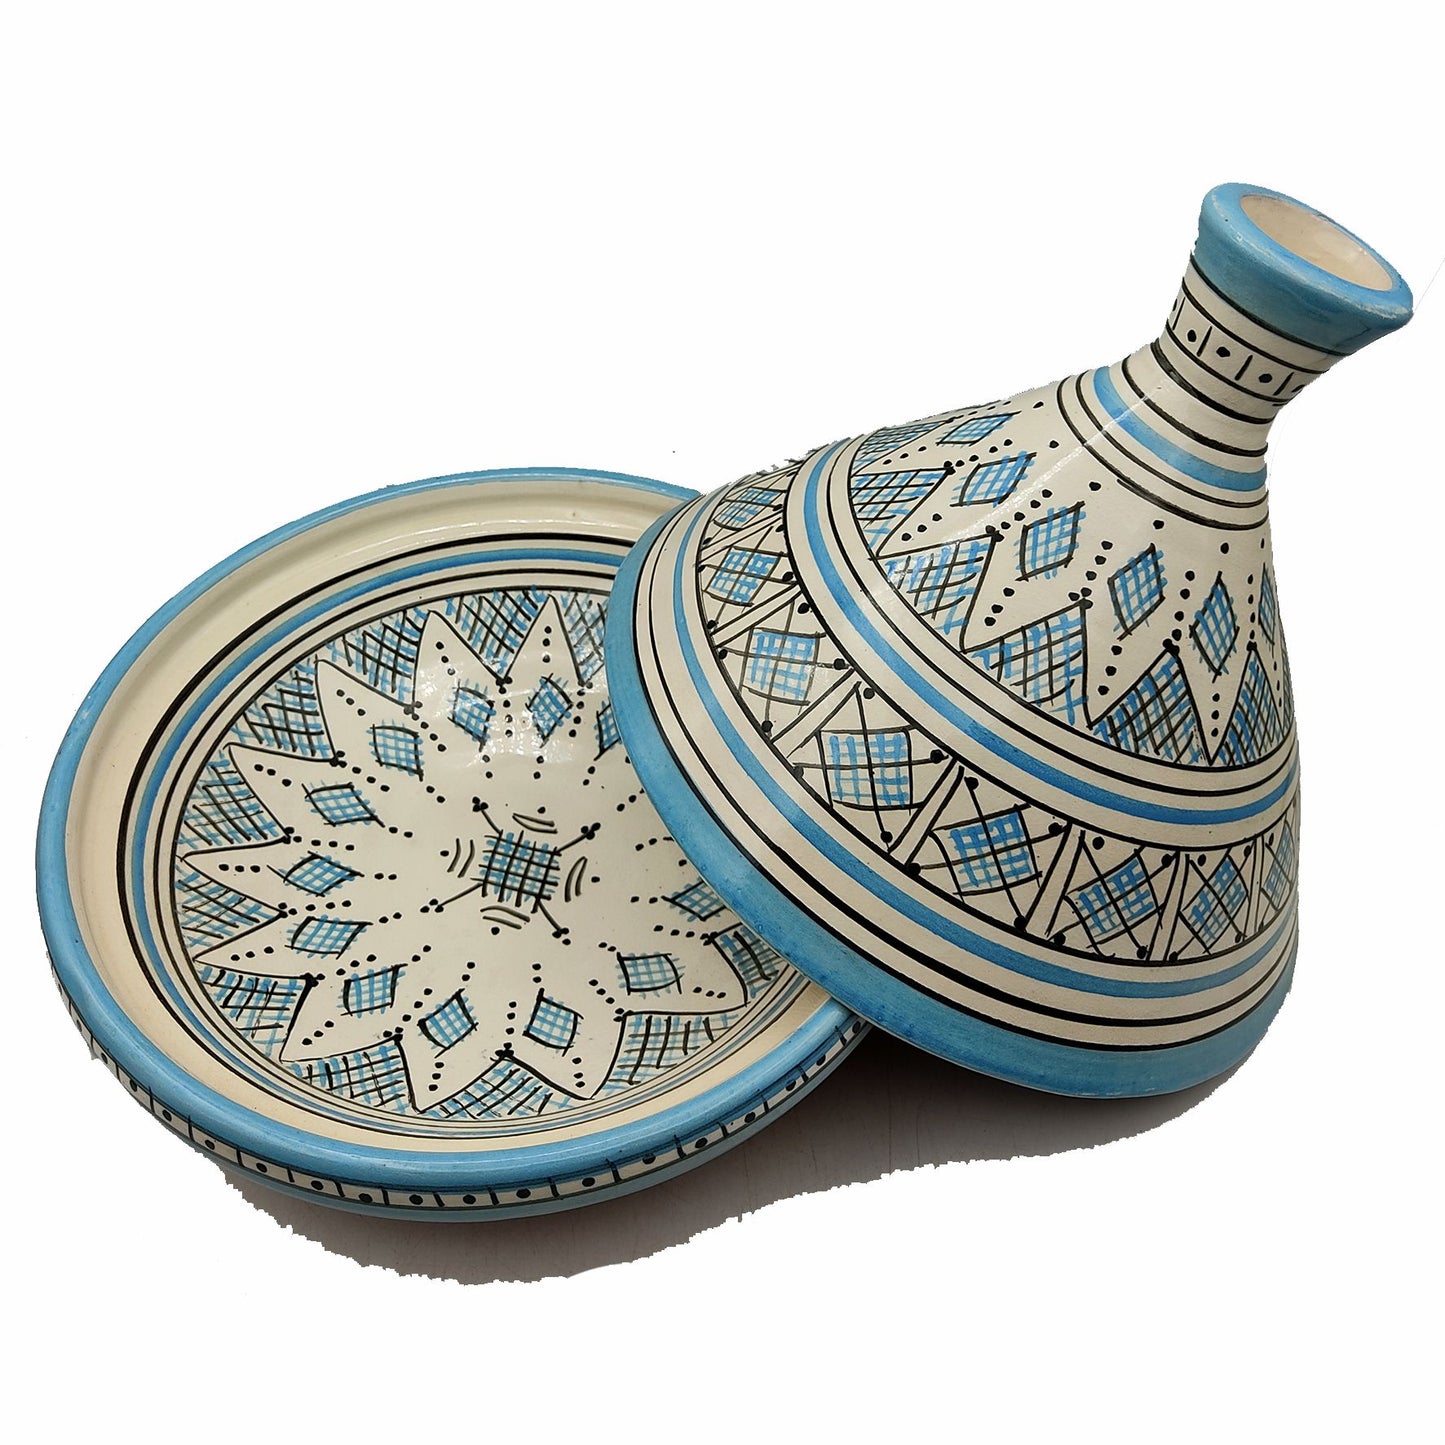 Decoratieve tajine keramiek terracotta Marokko Marokkaans etnisch handbeschilderd 2302221122